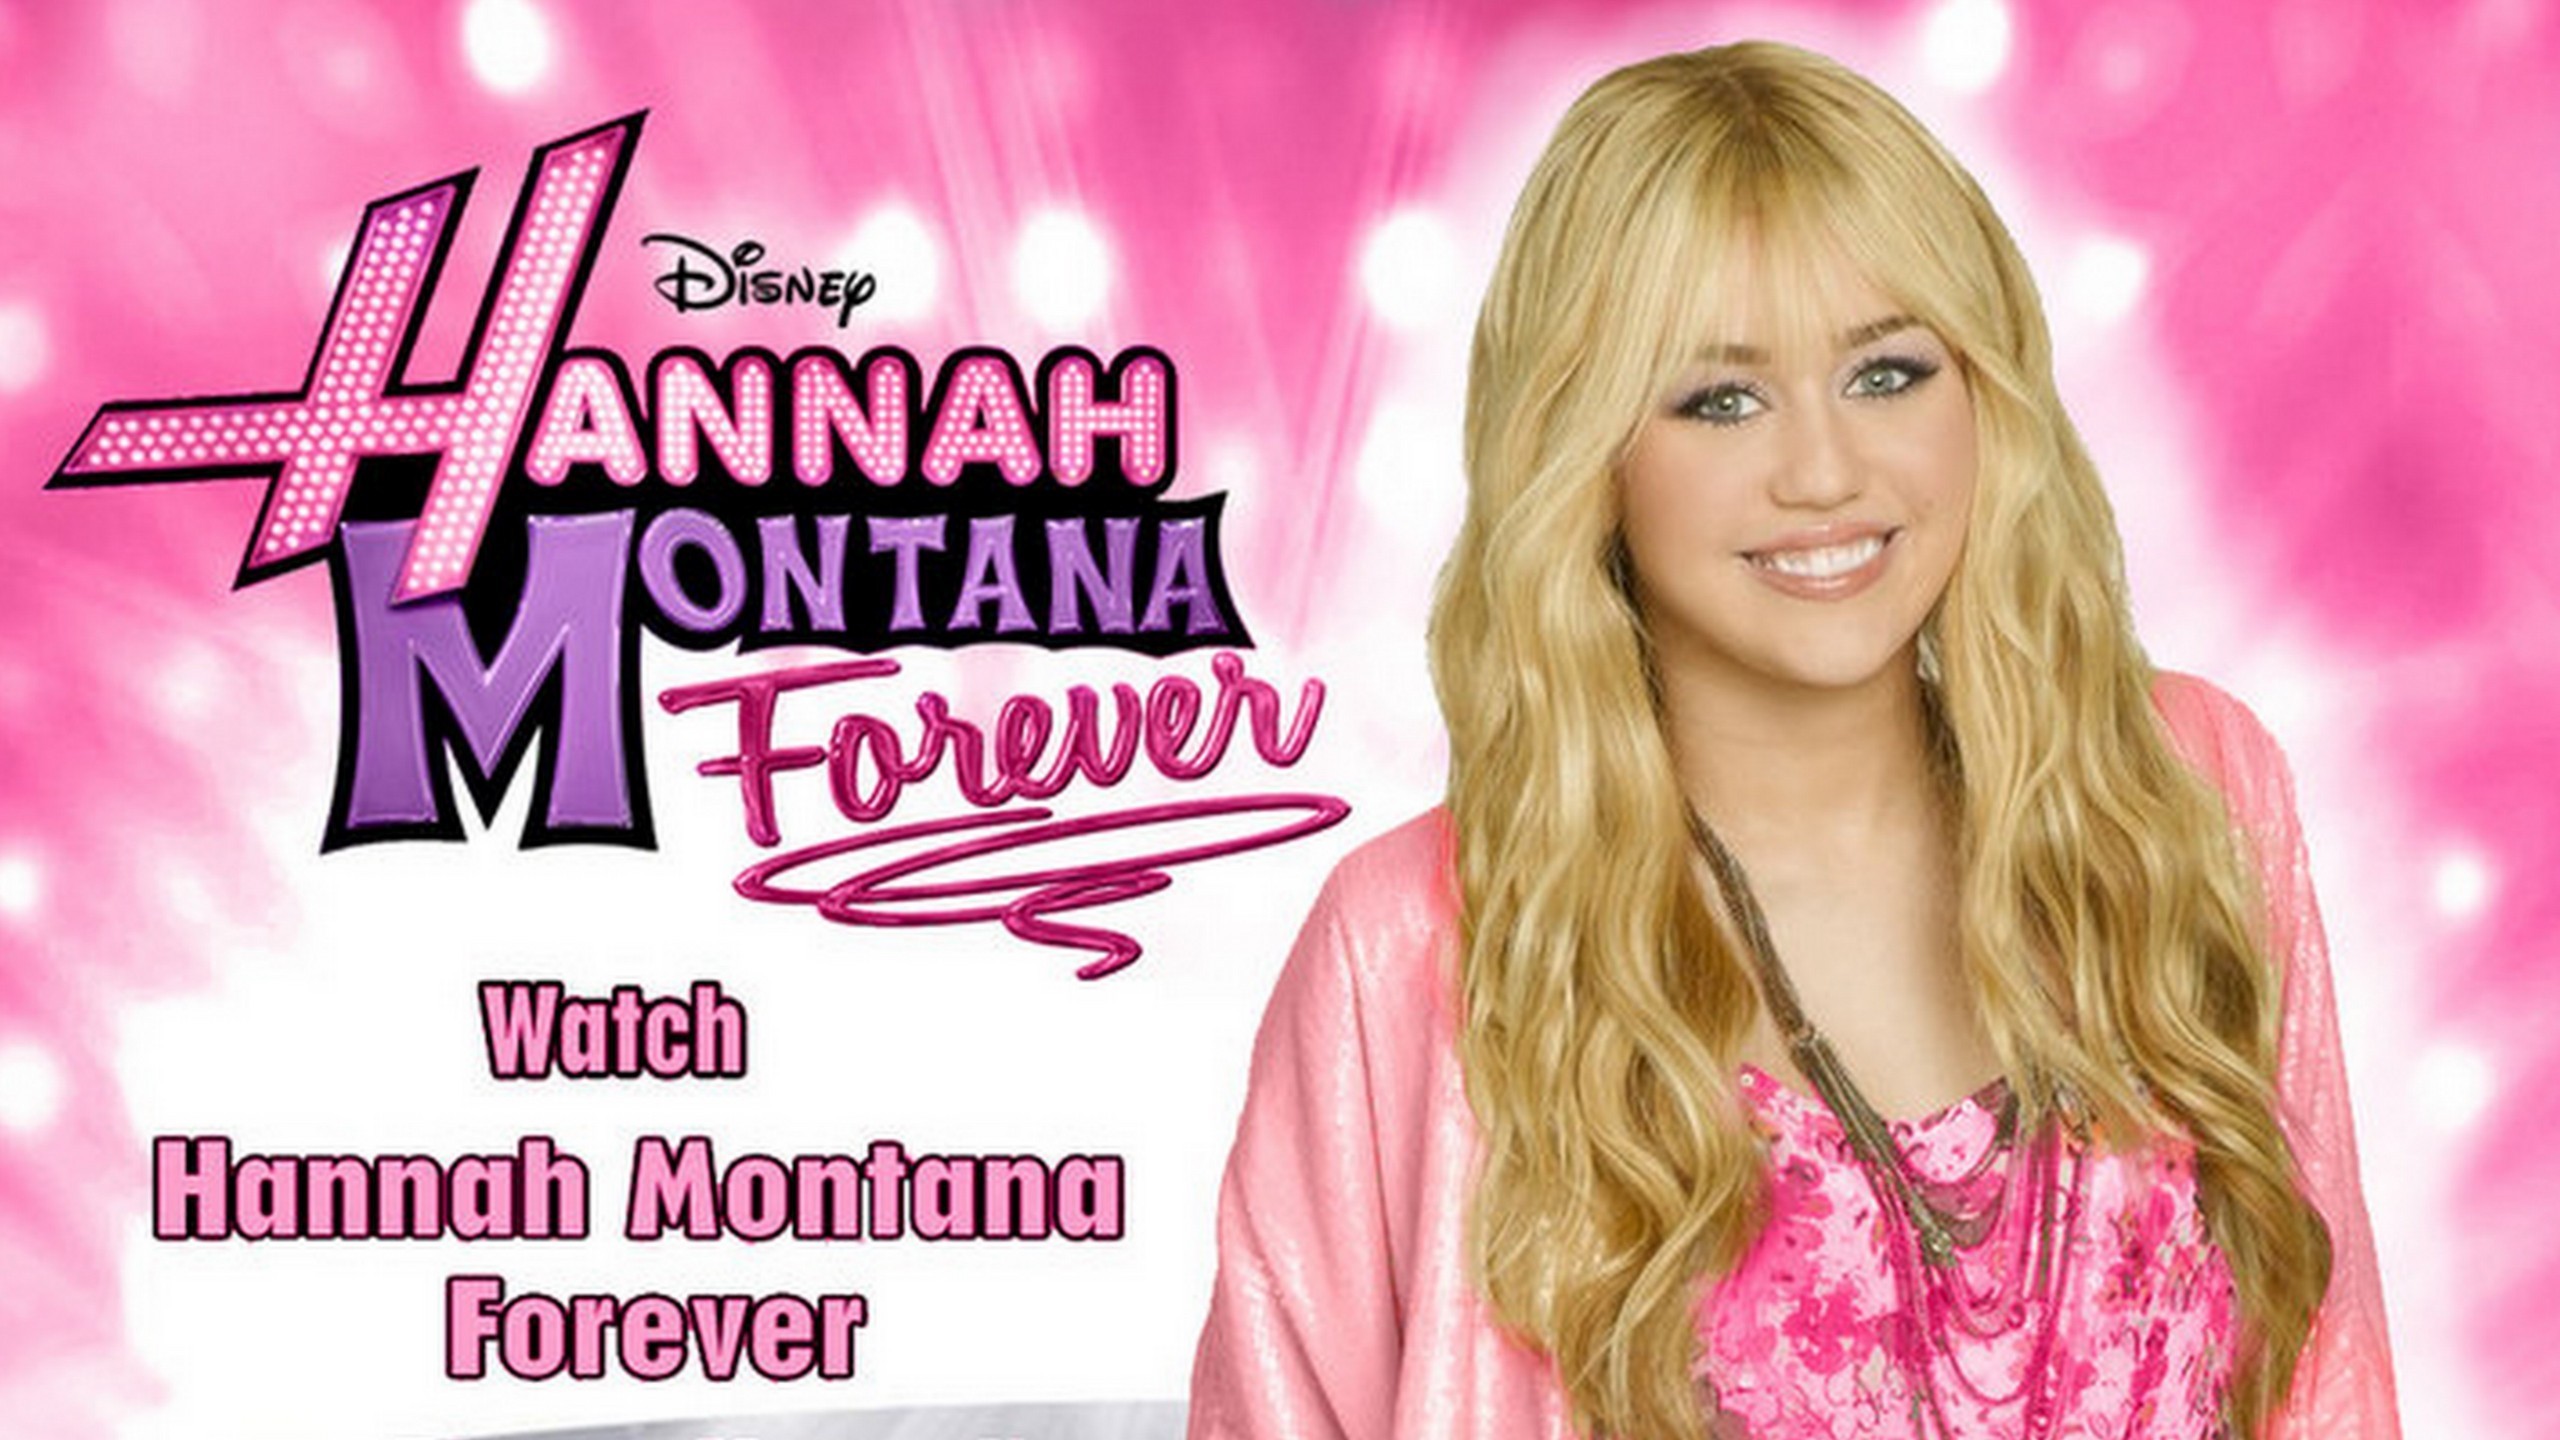 Hannah Montana Wallpapers Wallpapertag Images, Photos, Reviews